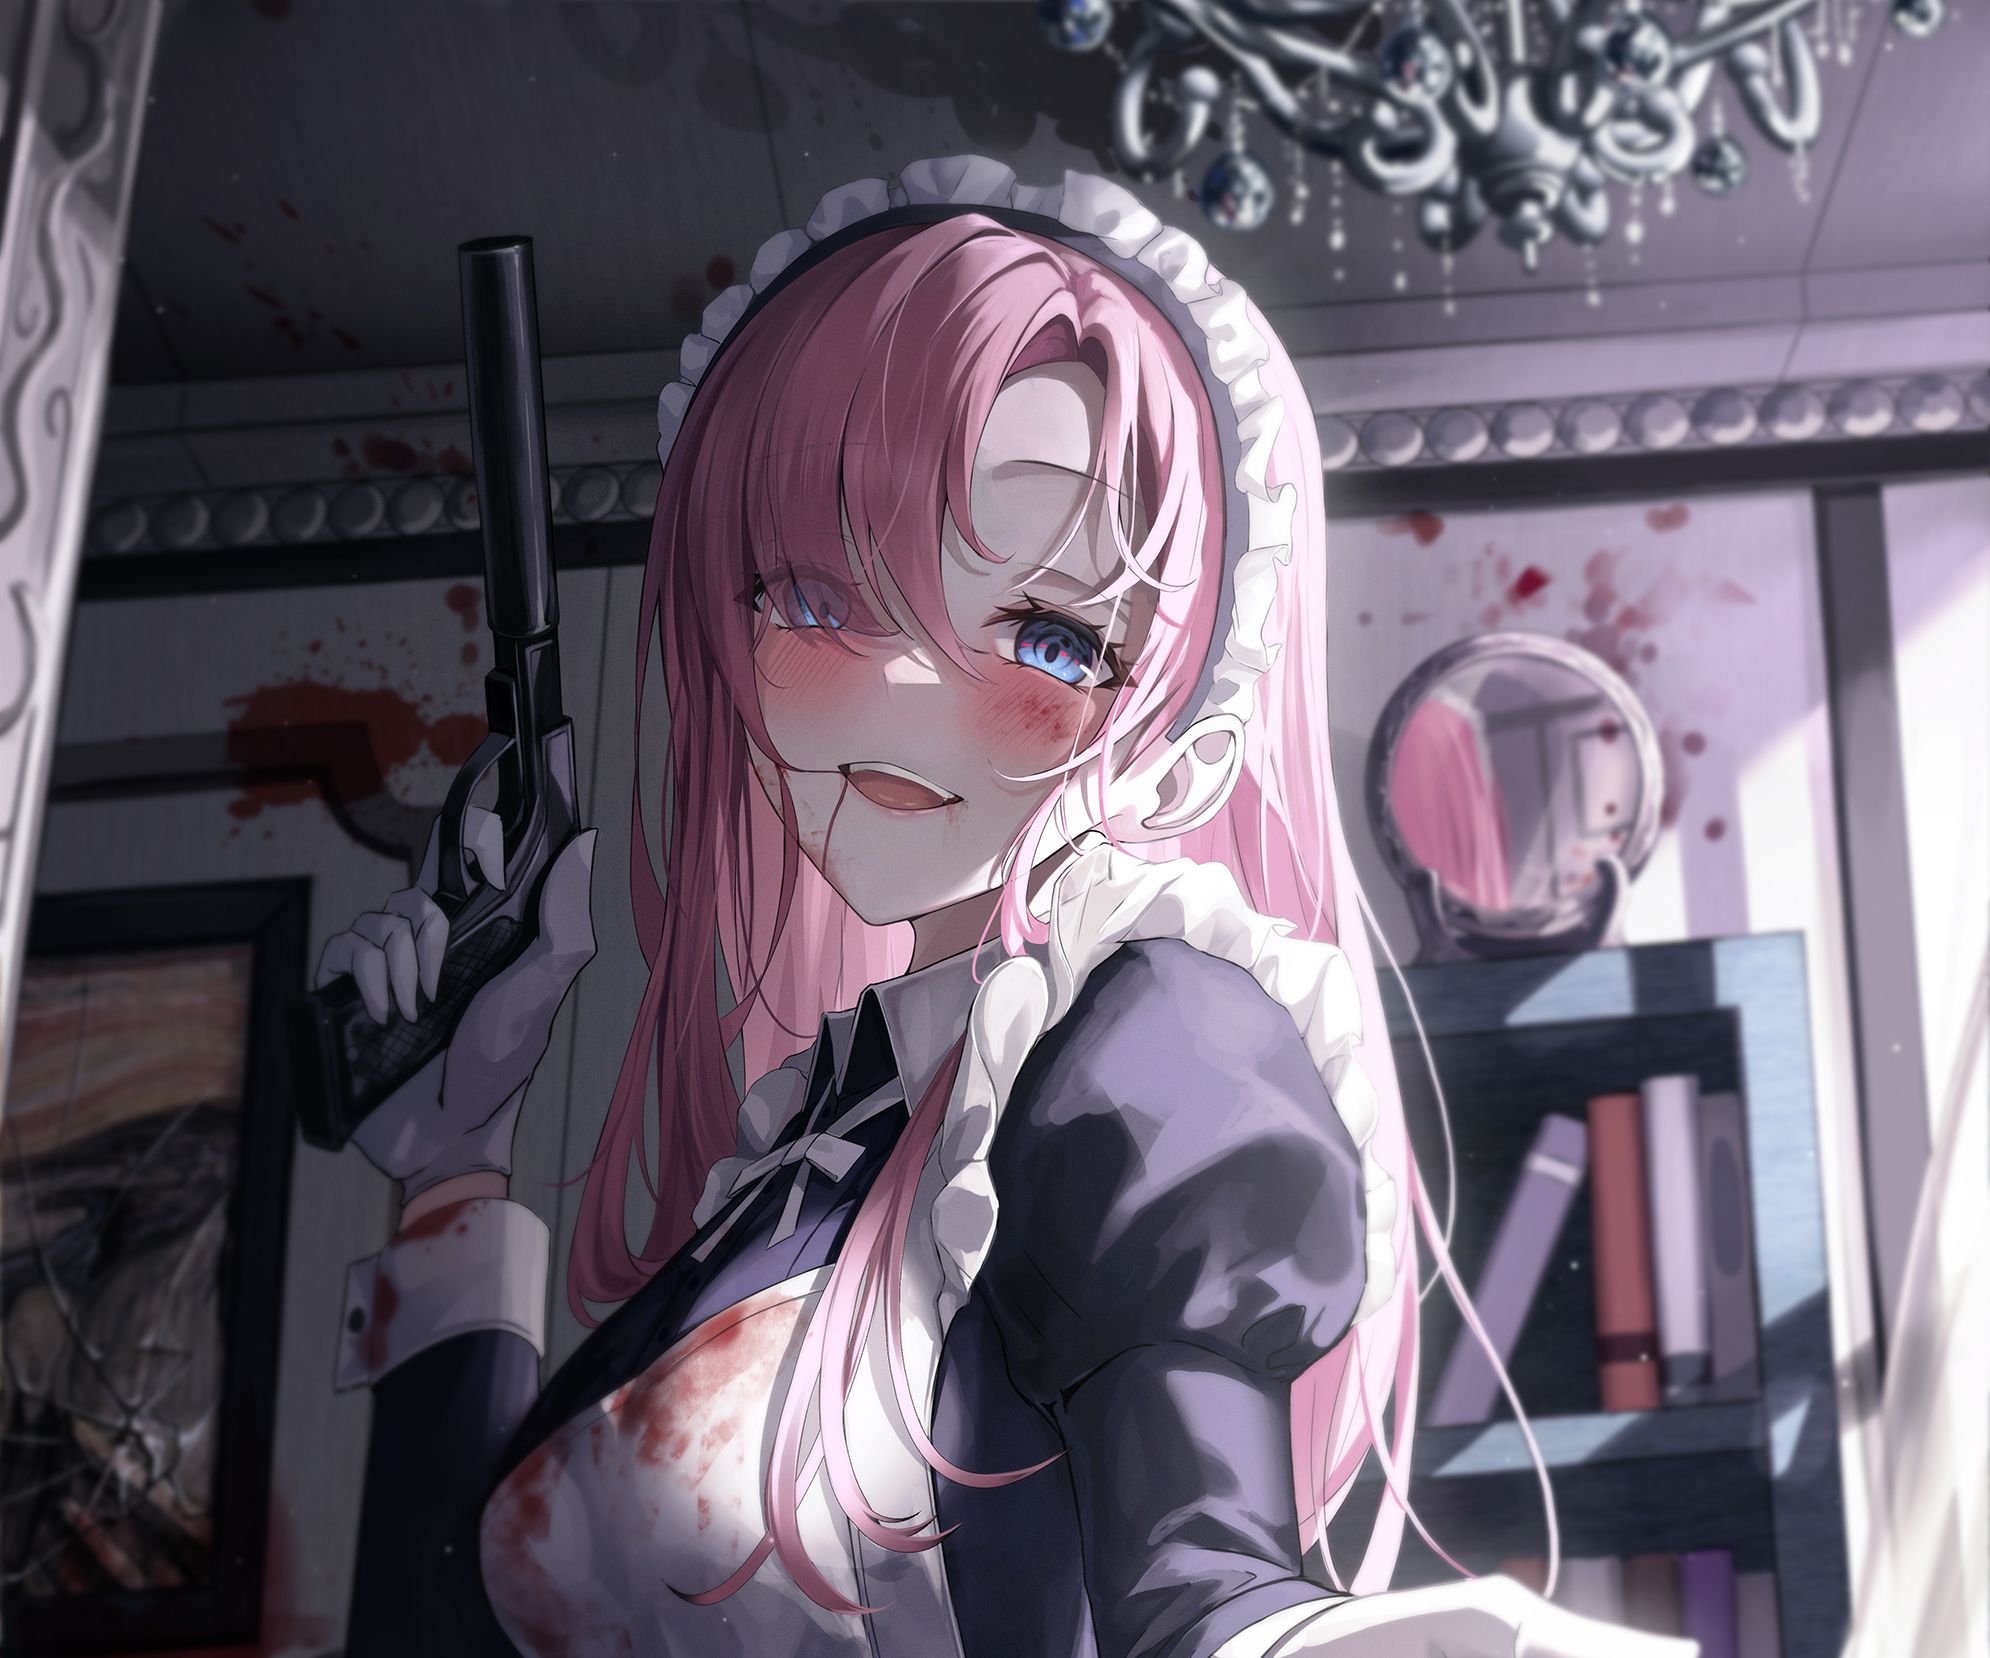 Anime girl with pink hair holding a gun - Anime girl